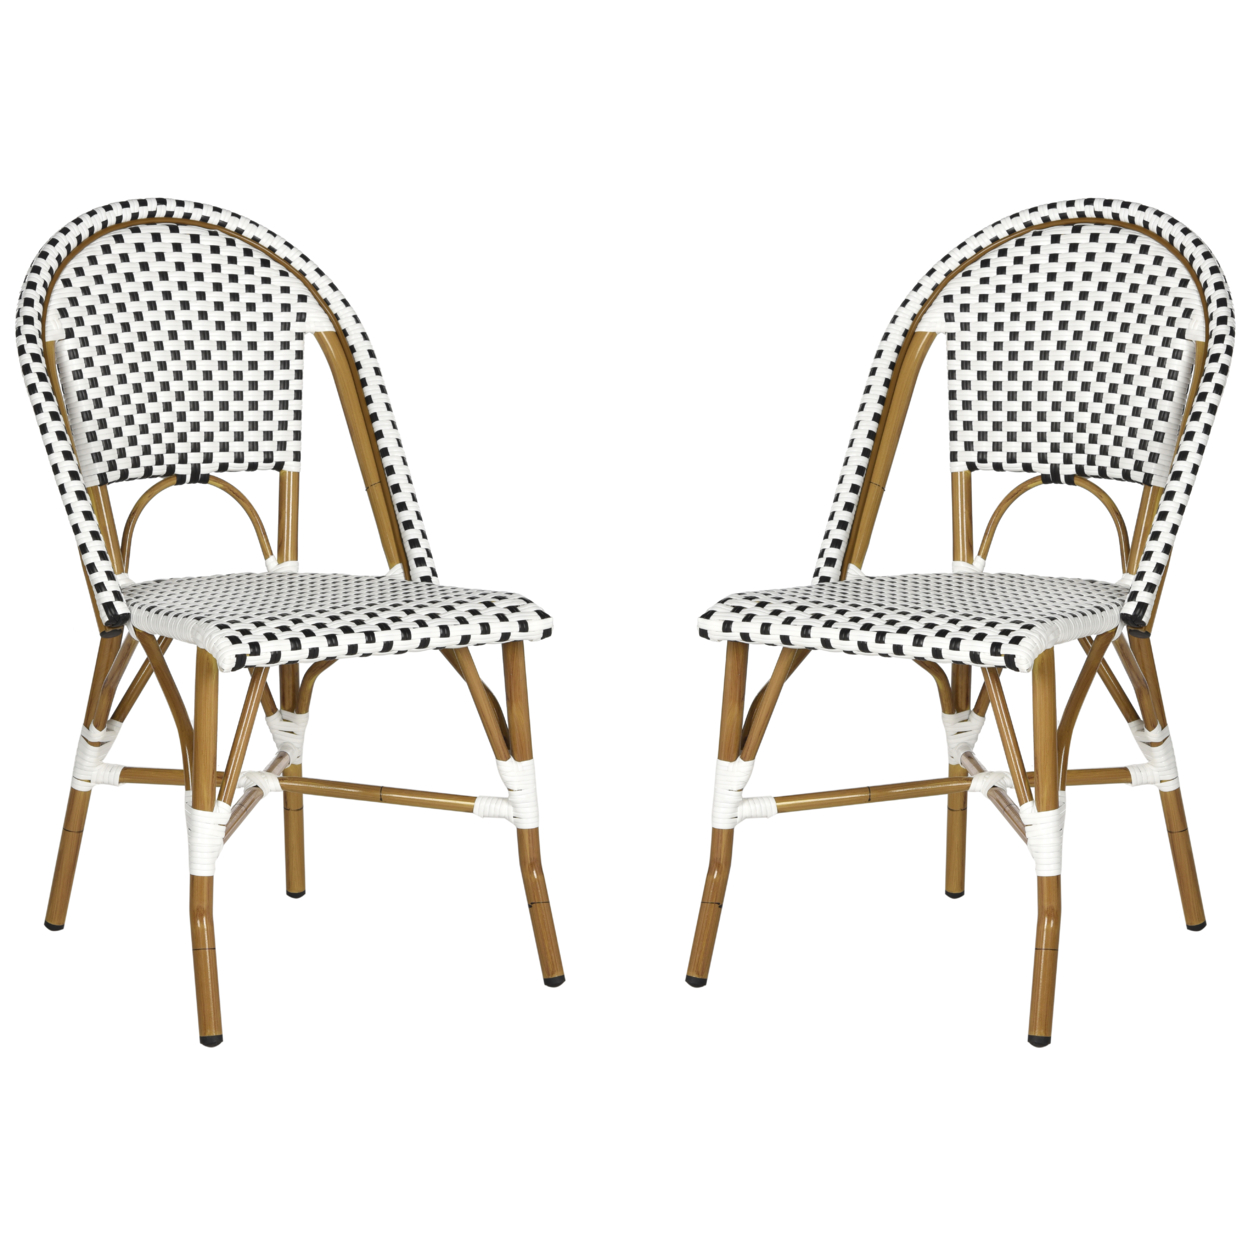 SAFAVIEH Outdoor Collection Salcha Bistro Side Chair Black/White/Light Brown